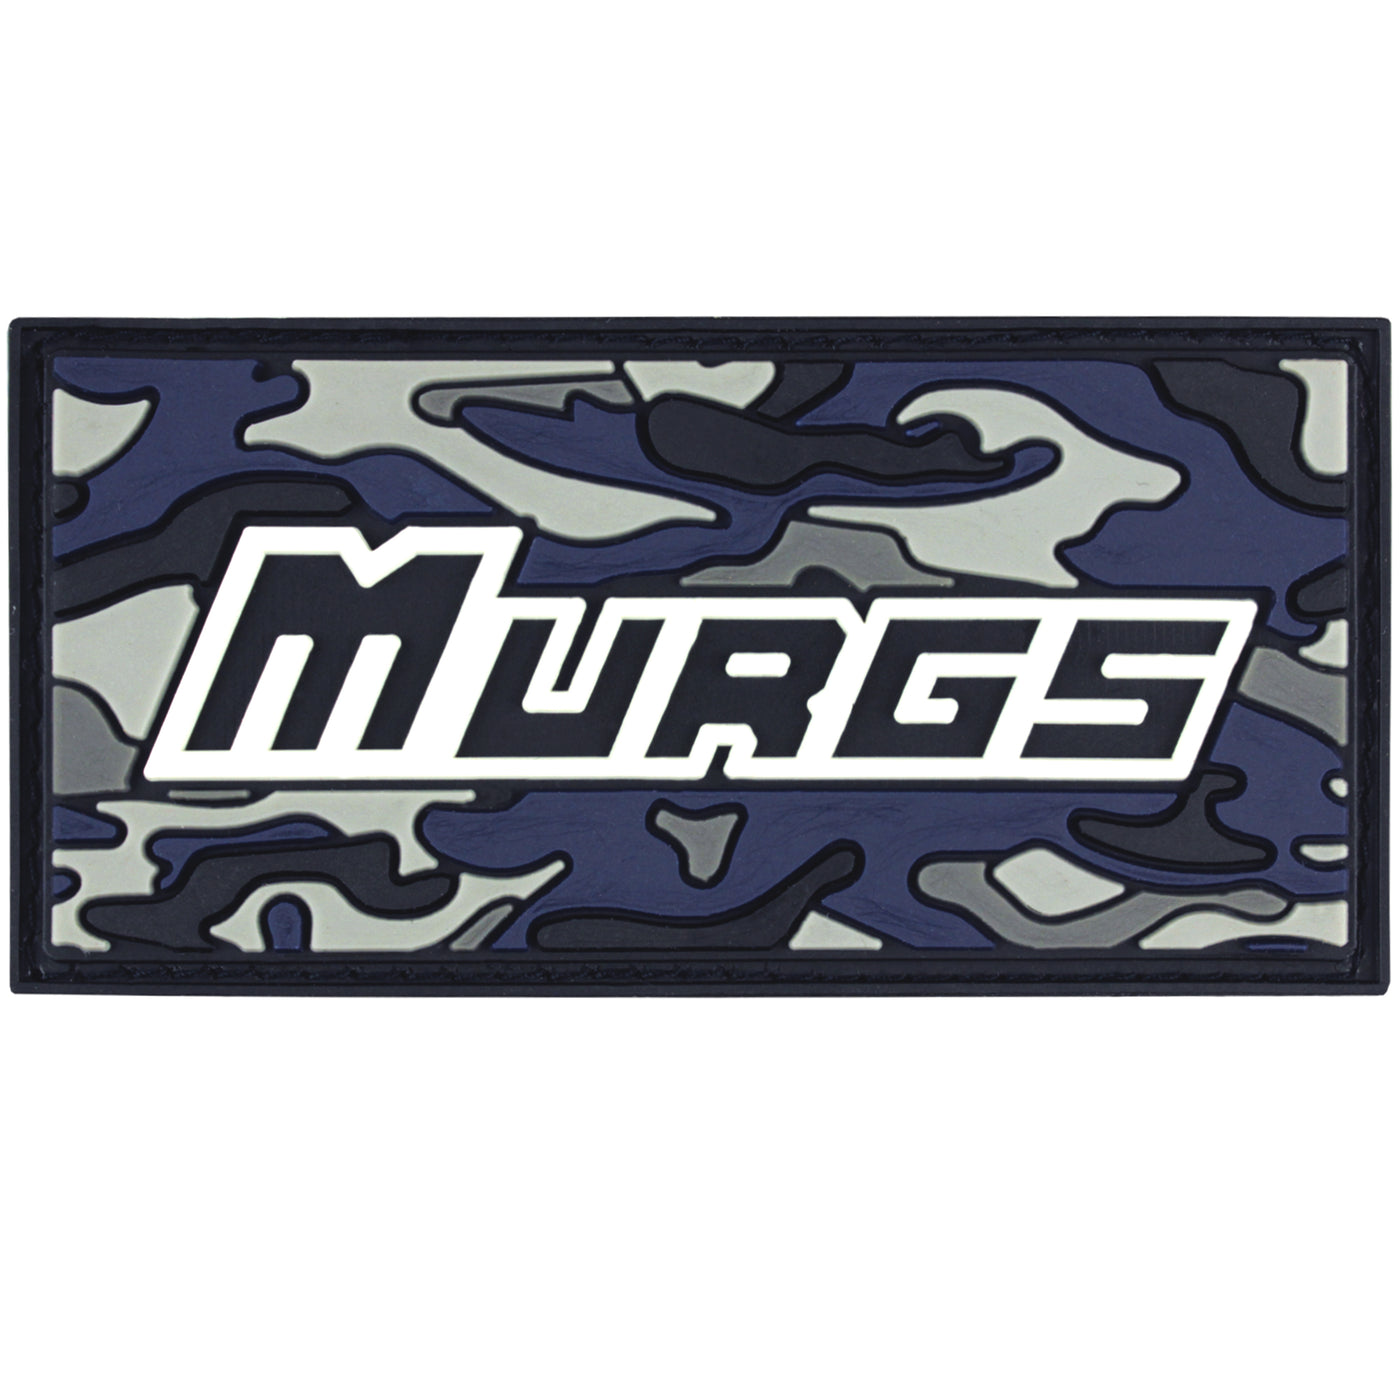 Murgs grey camo bag patch with white Murgs logo